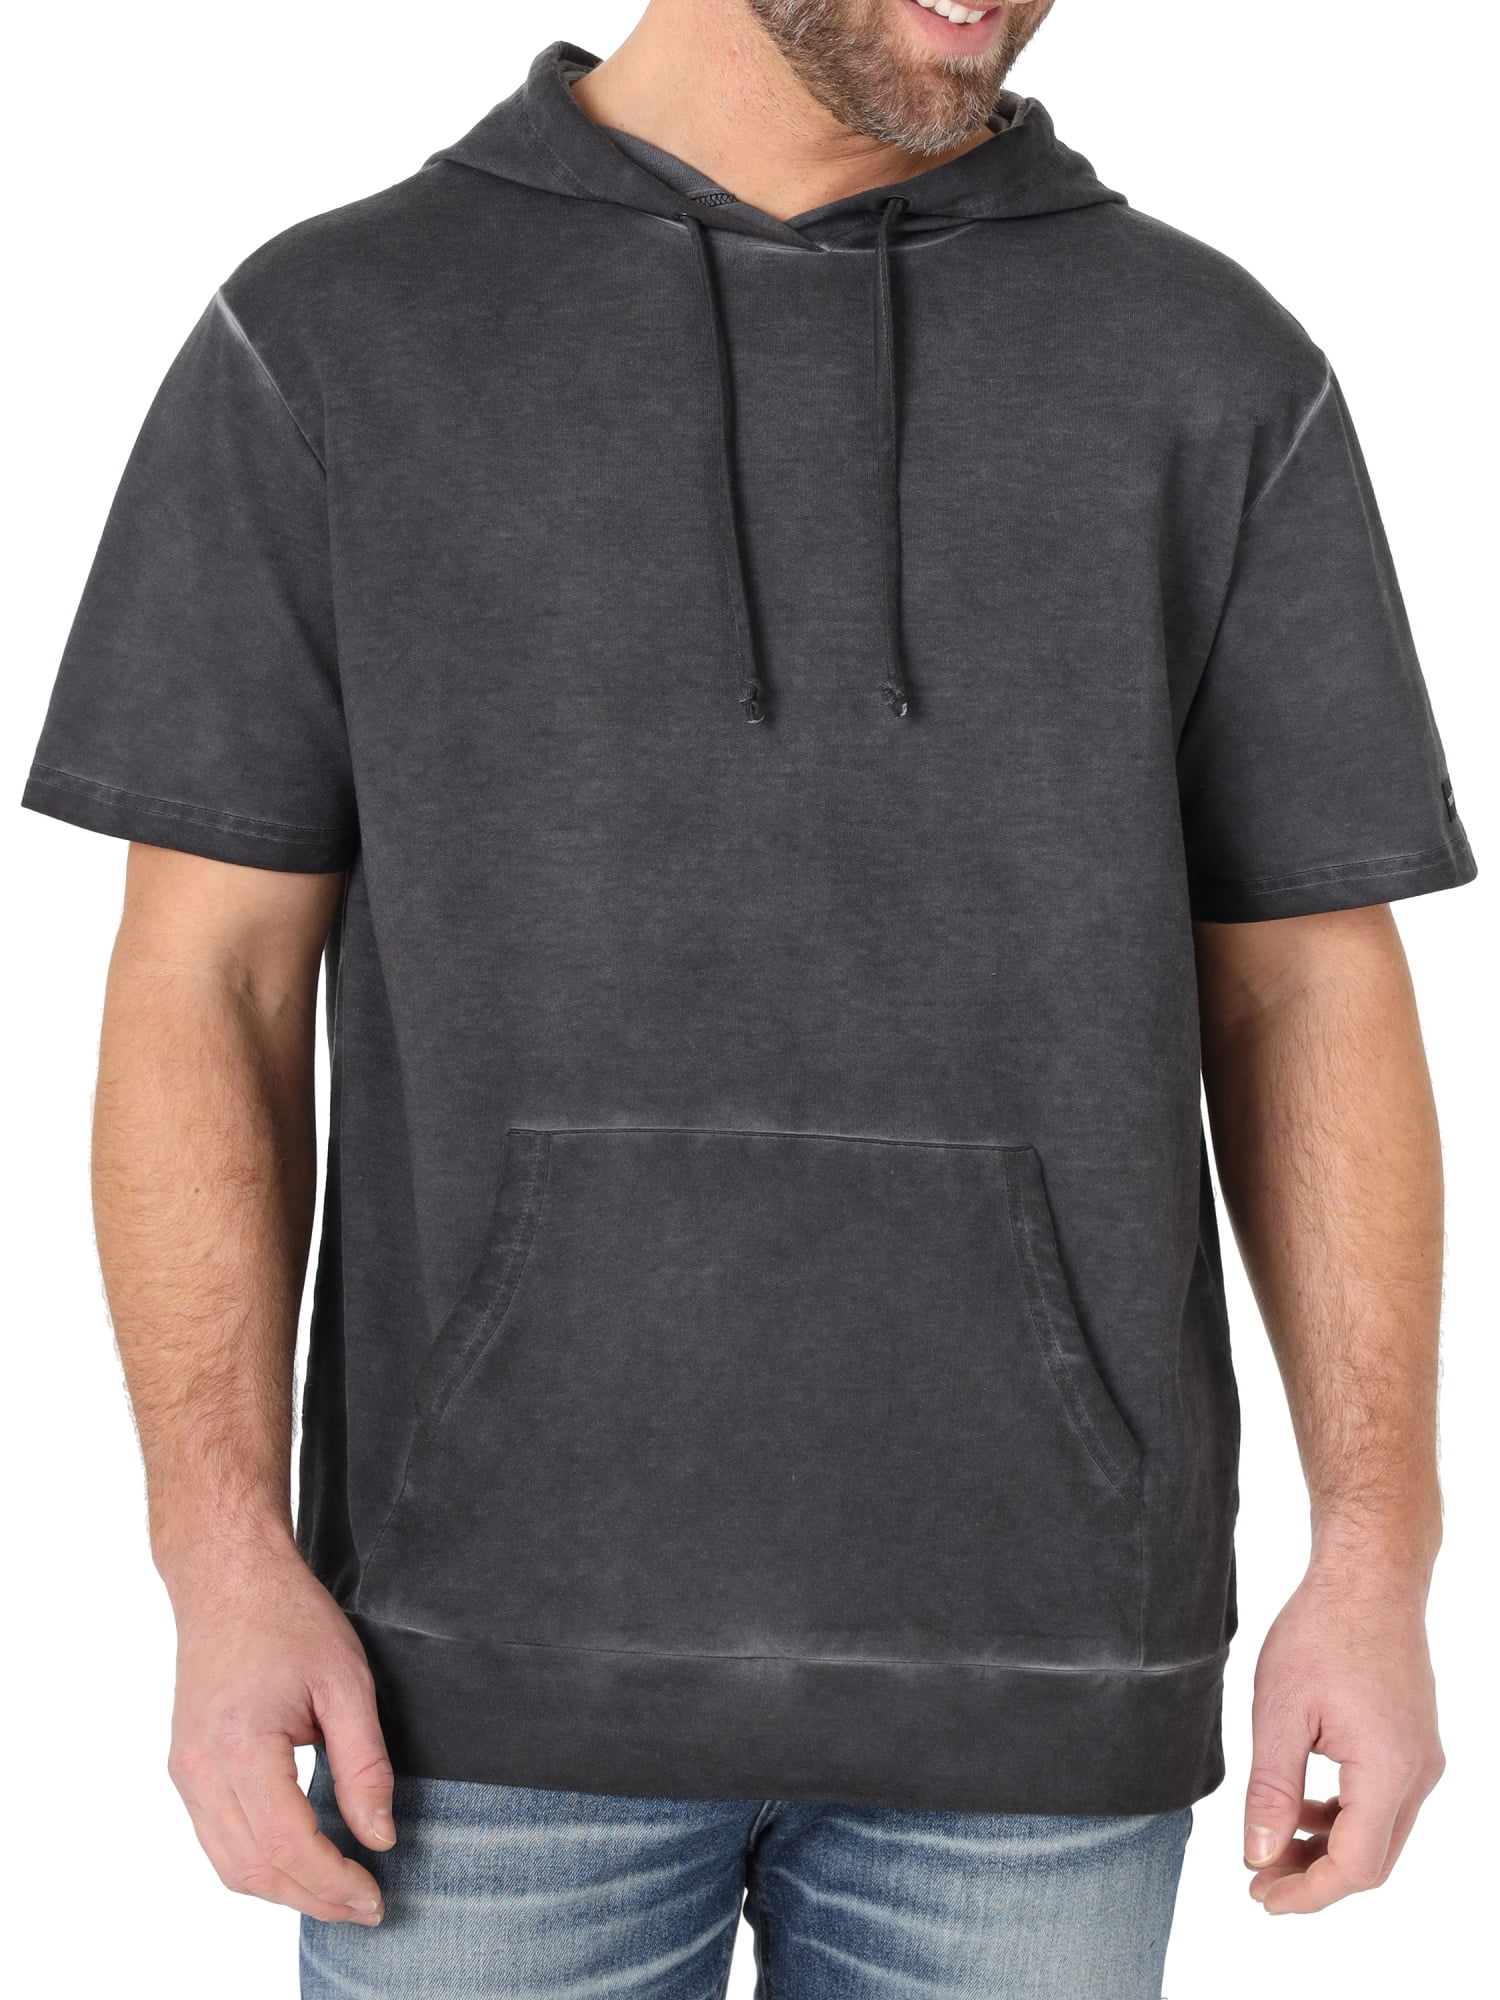 Rock & Republic Men's Short Sleeve Hoodie Sweatshirt - Kangaroo Pocket ...